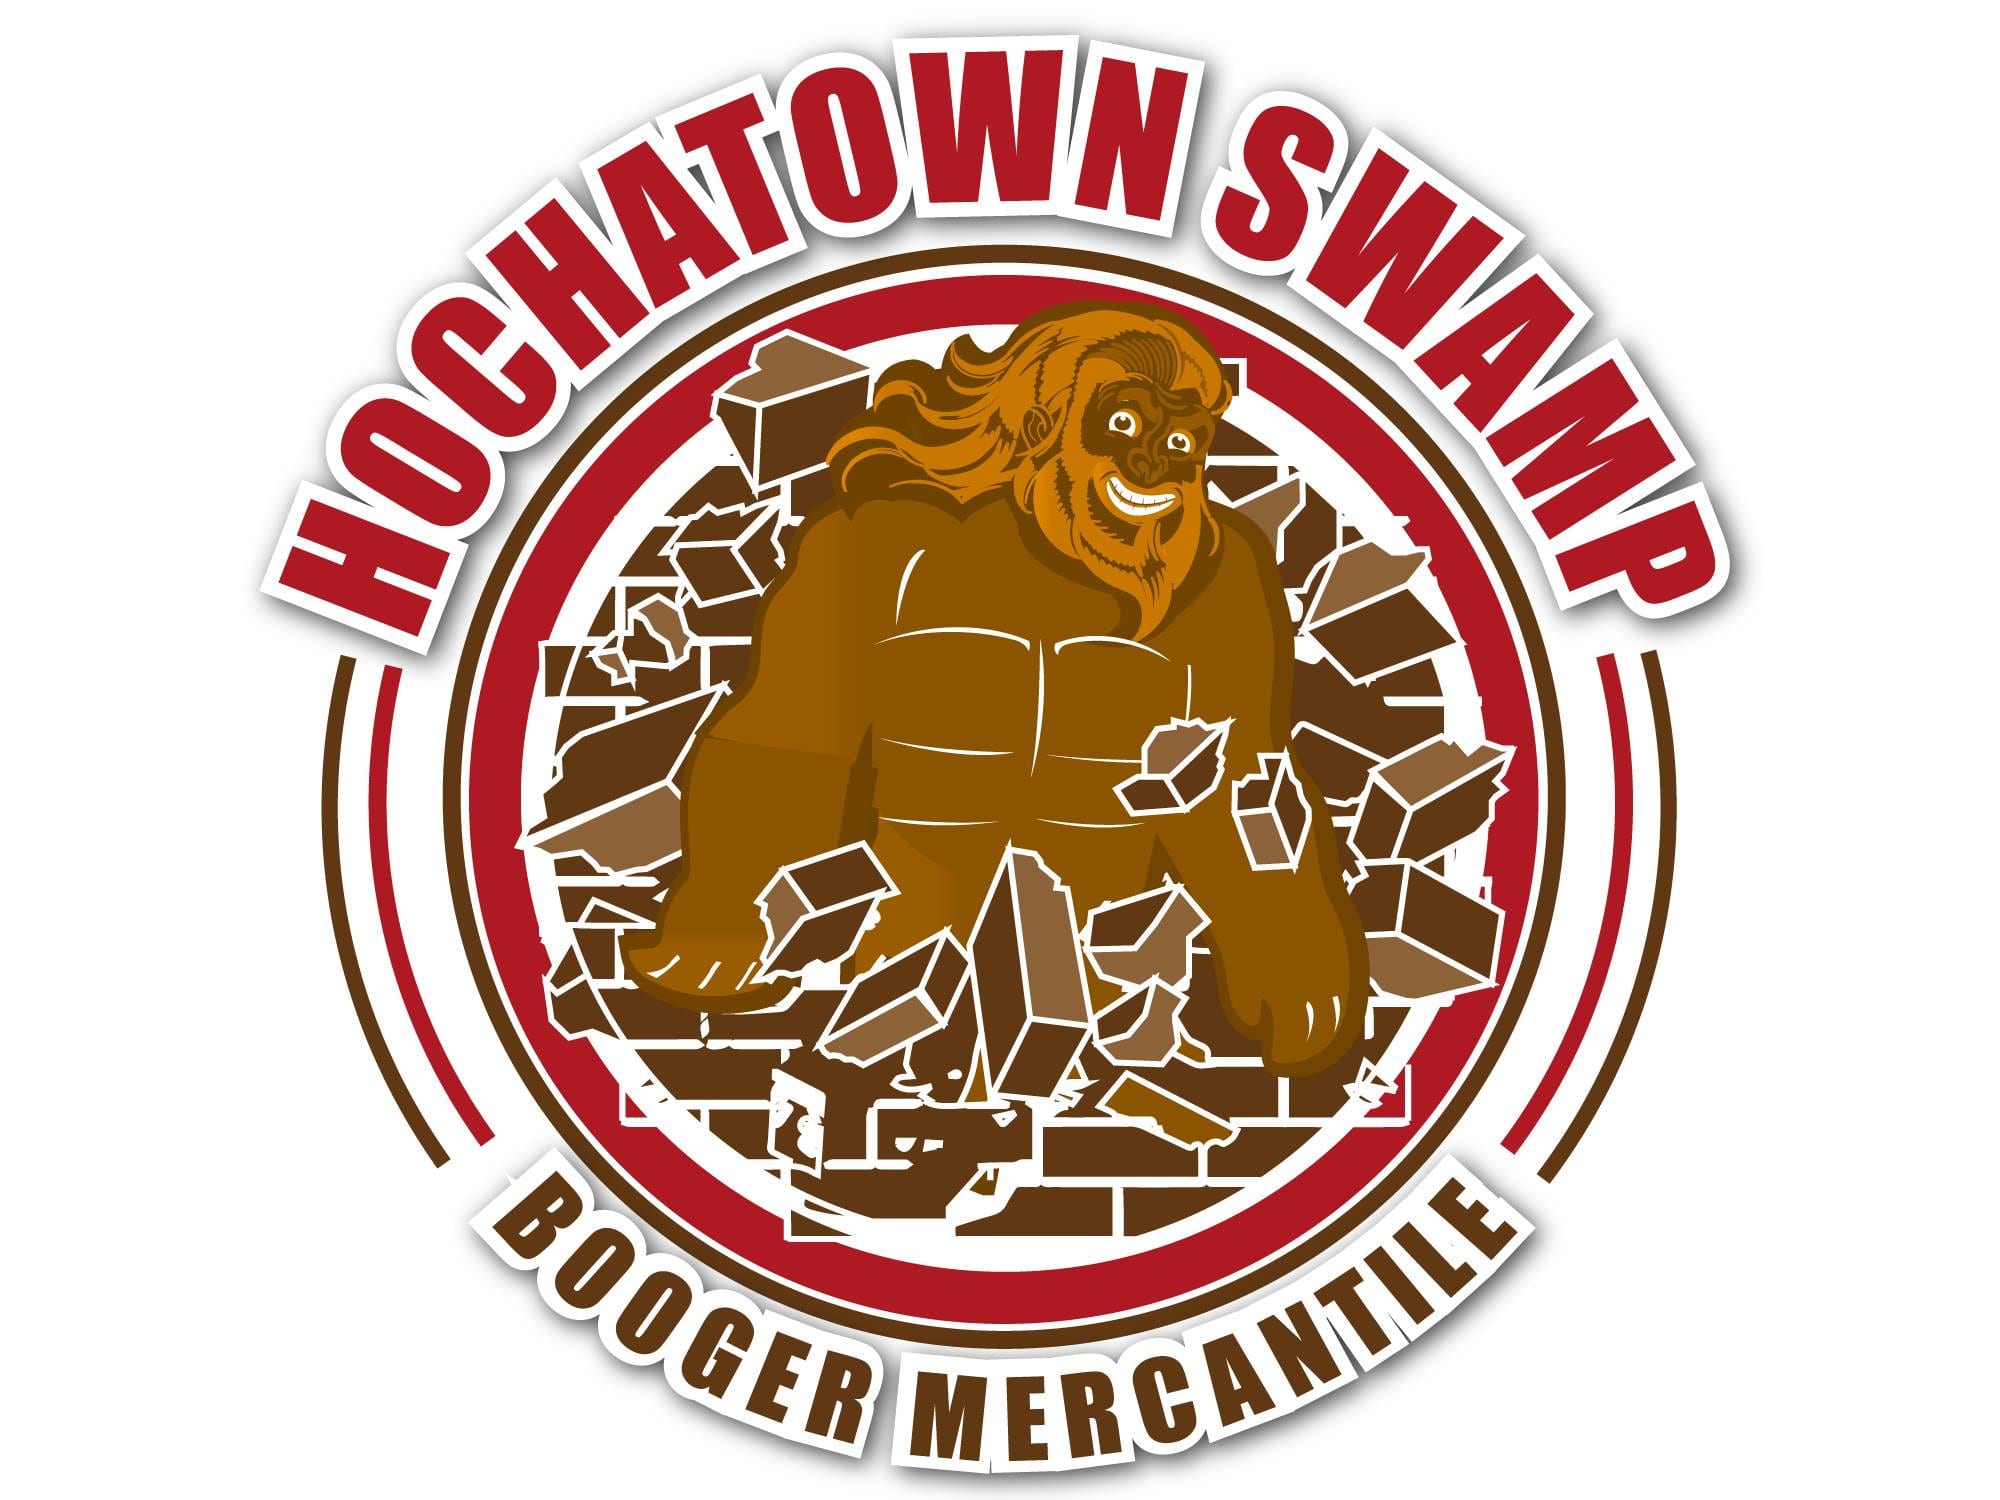 Hochatown Swamp Booger Mercantile logo